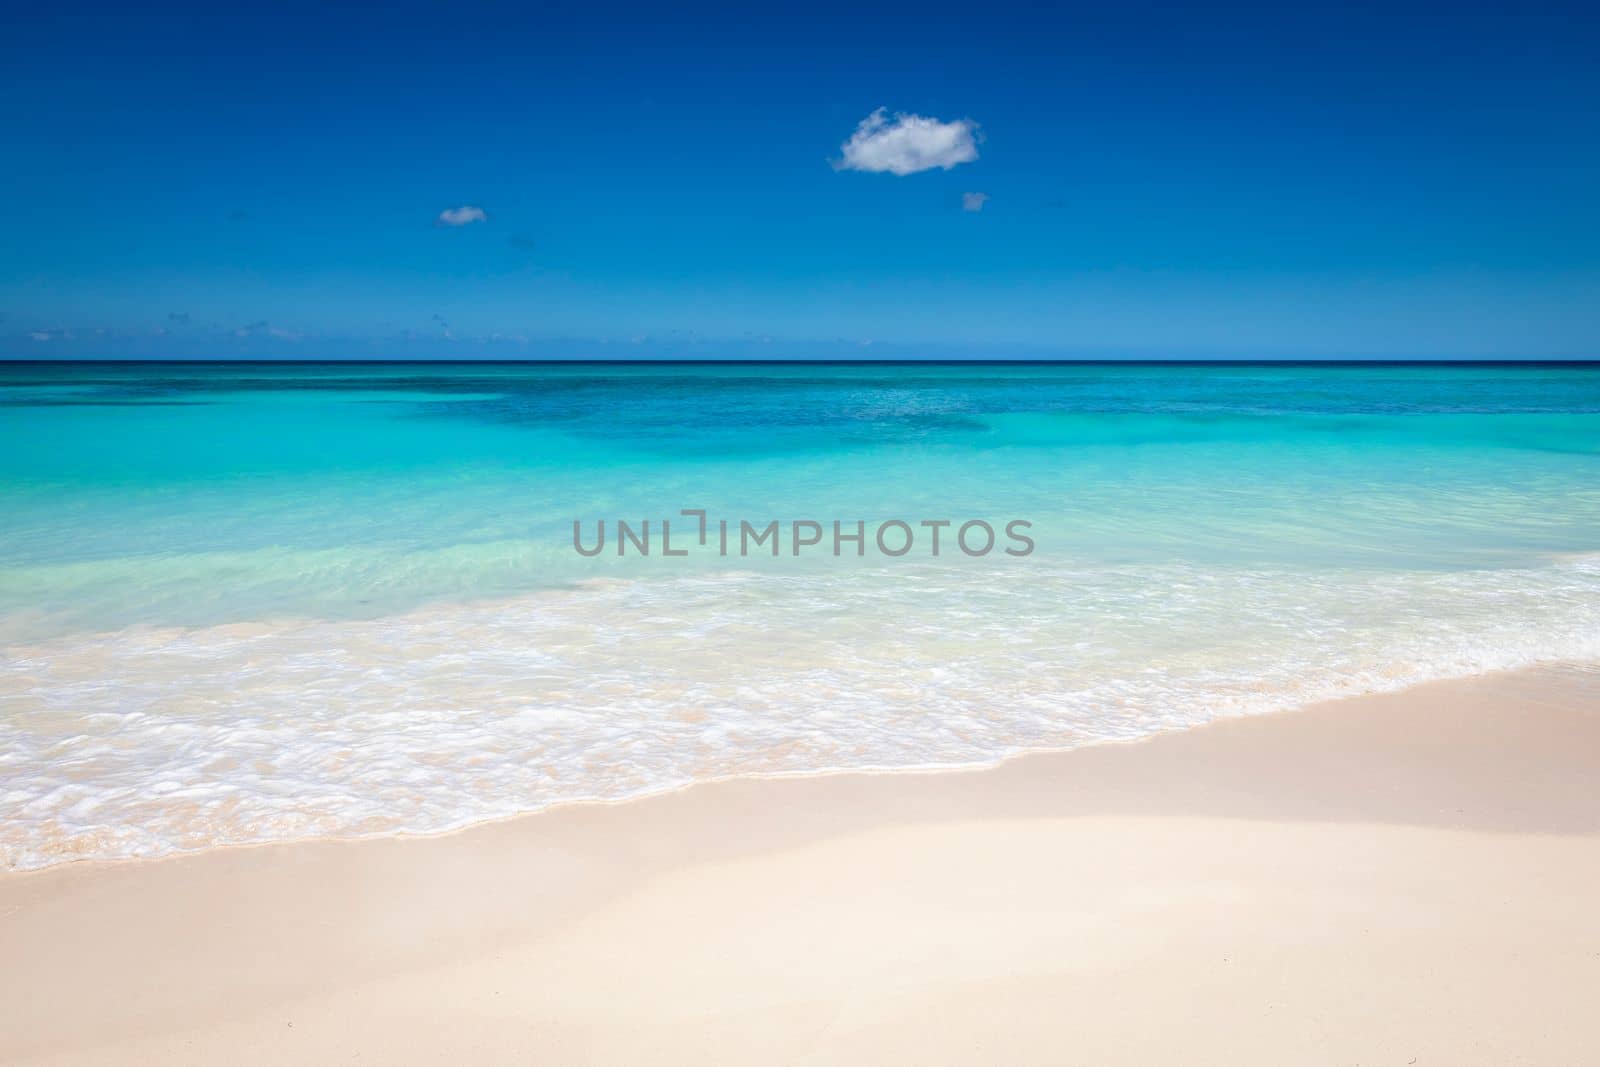 Tropical beach in caribbean sea, idyllic Saona island, Punta Cana, Dominican Republic